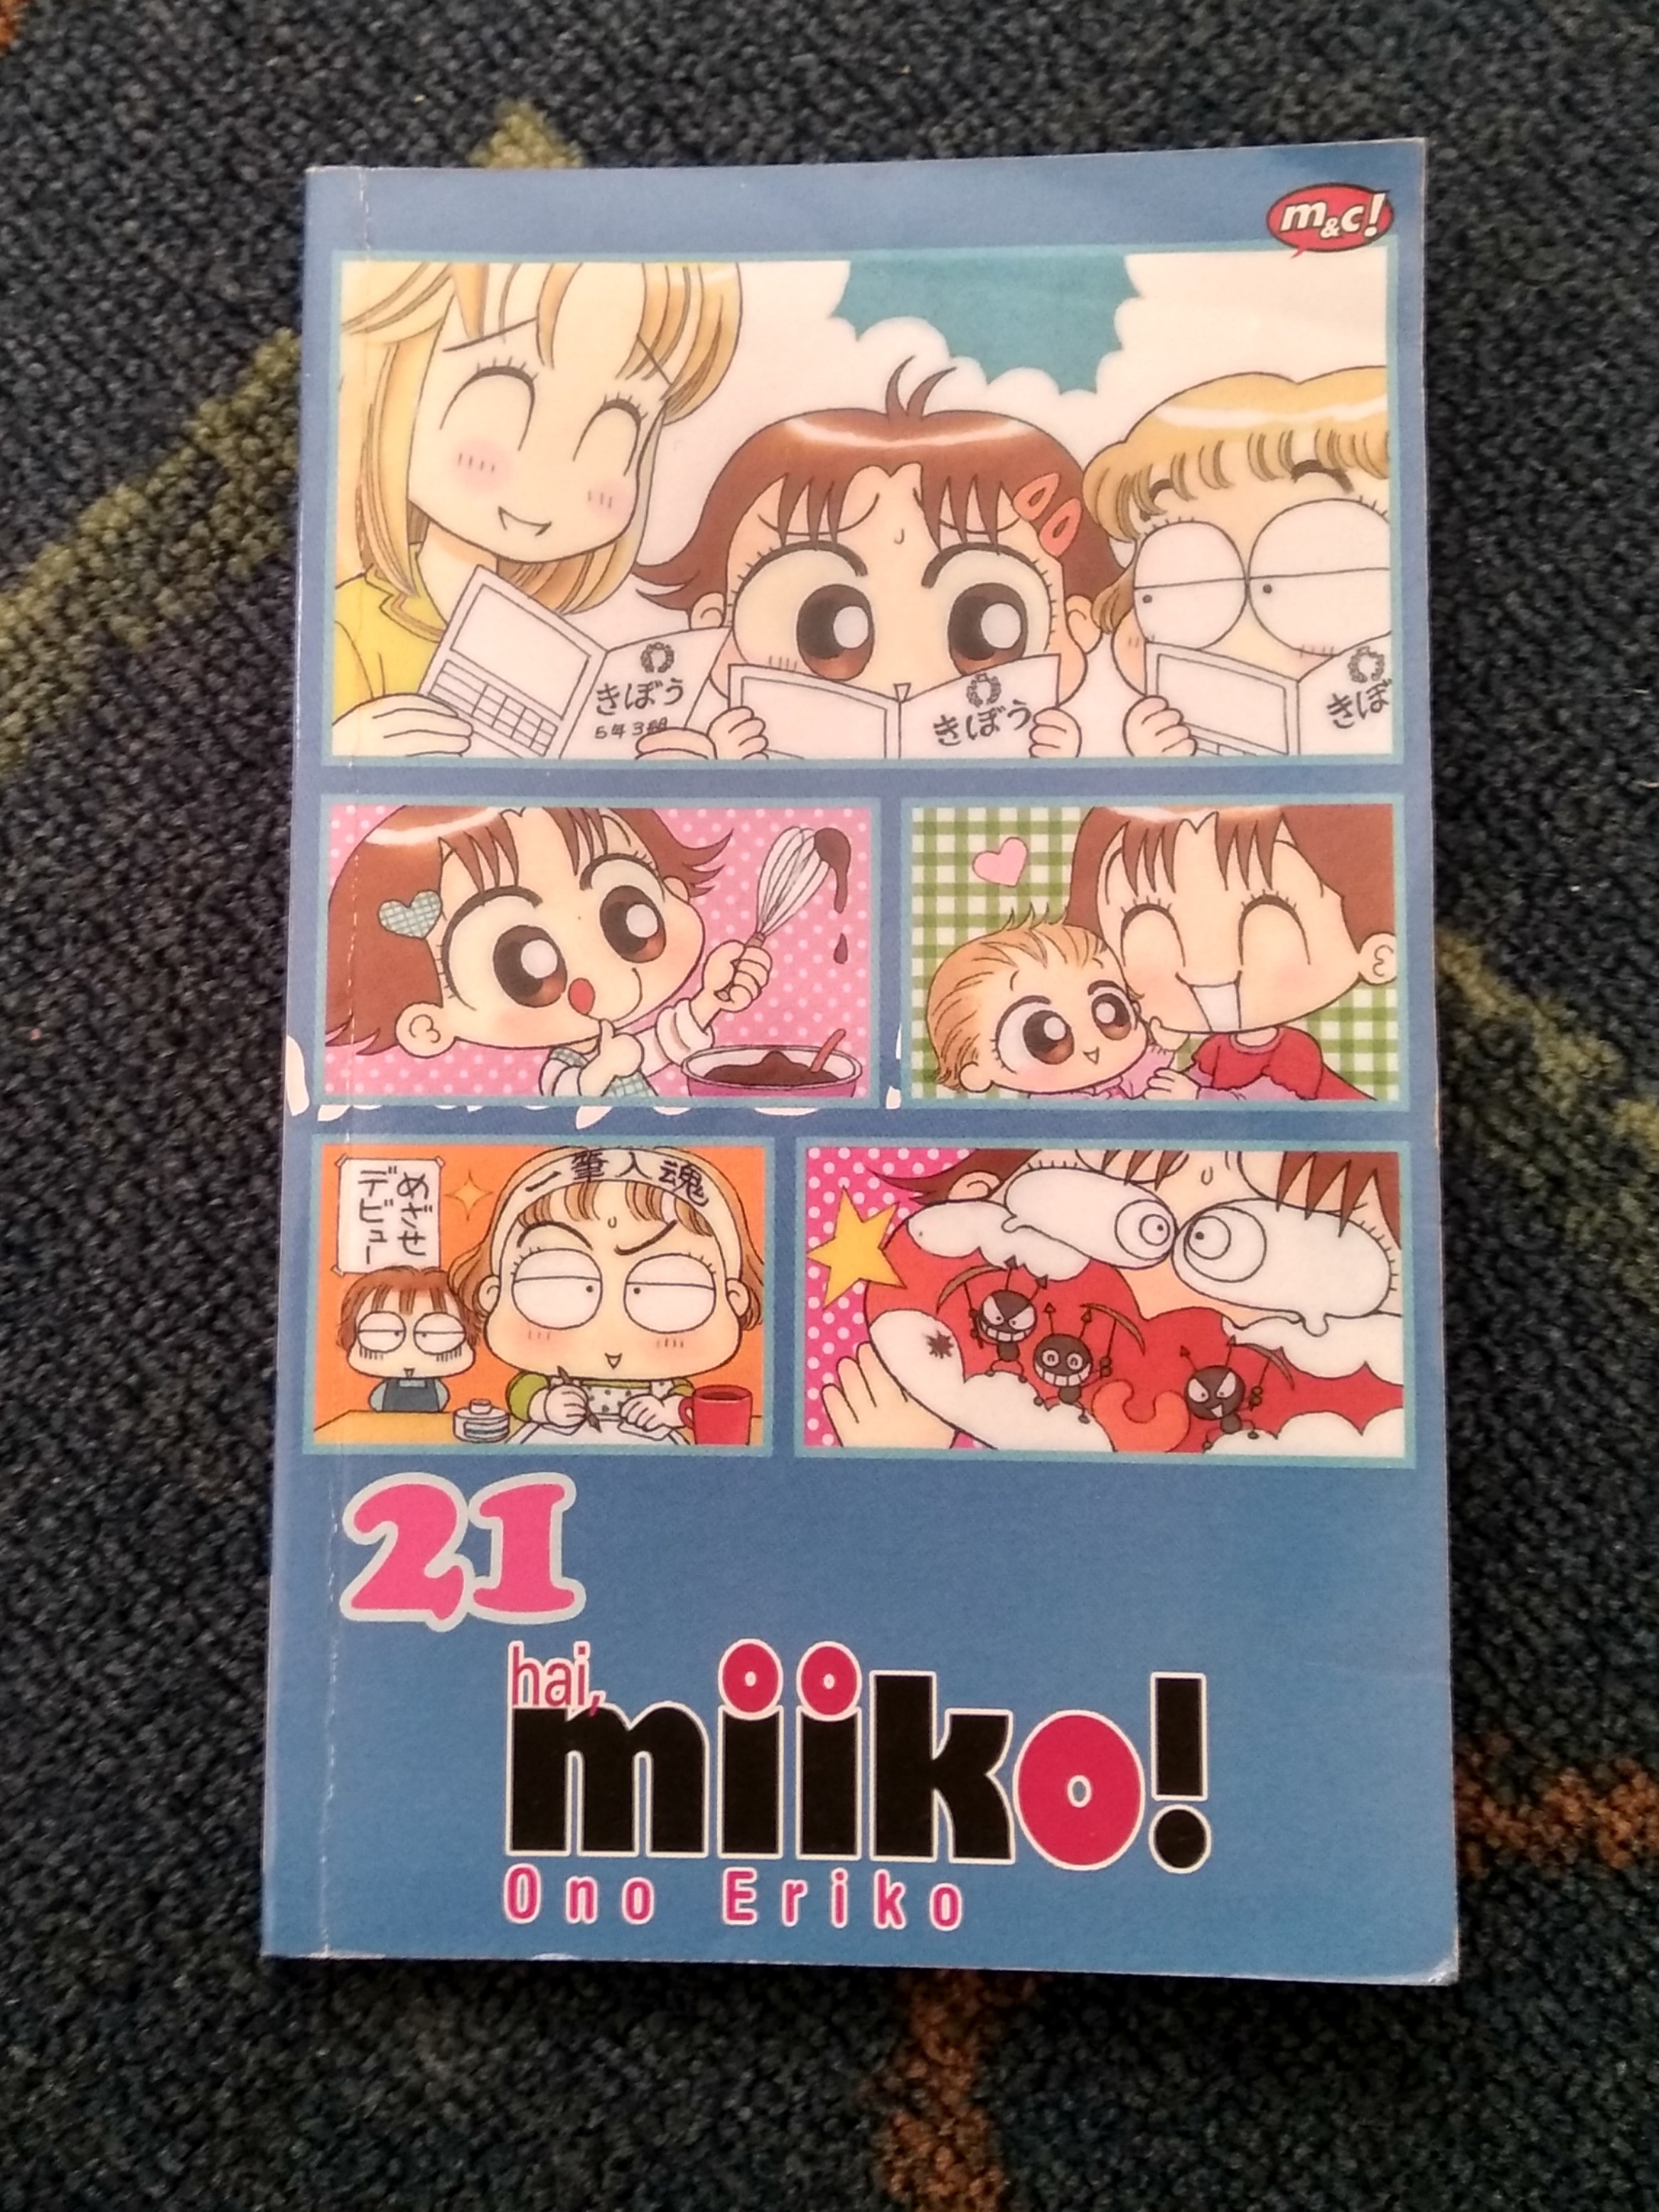 Komik Hai Miiko Vol 21 Ono Eriko Books Stationery Comics